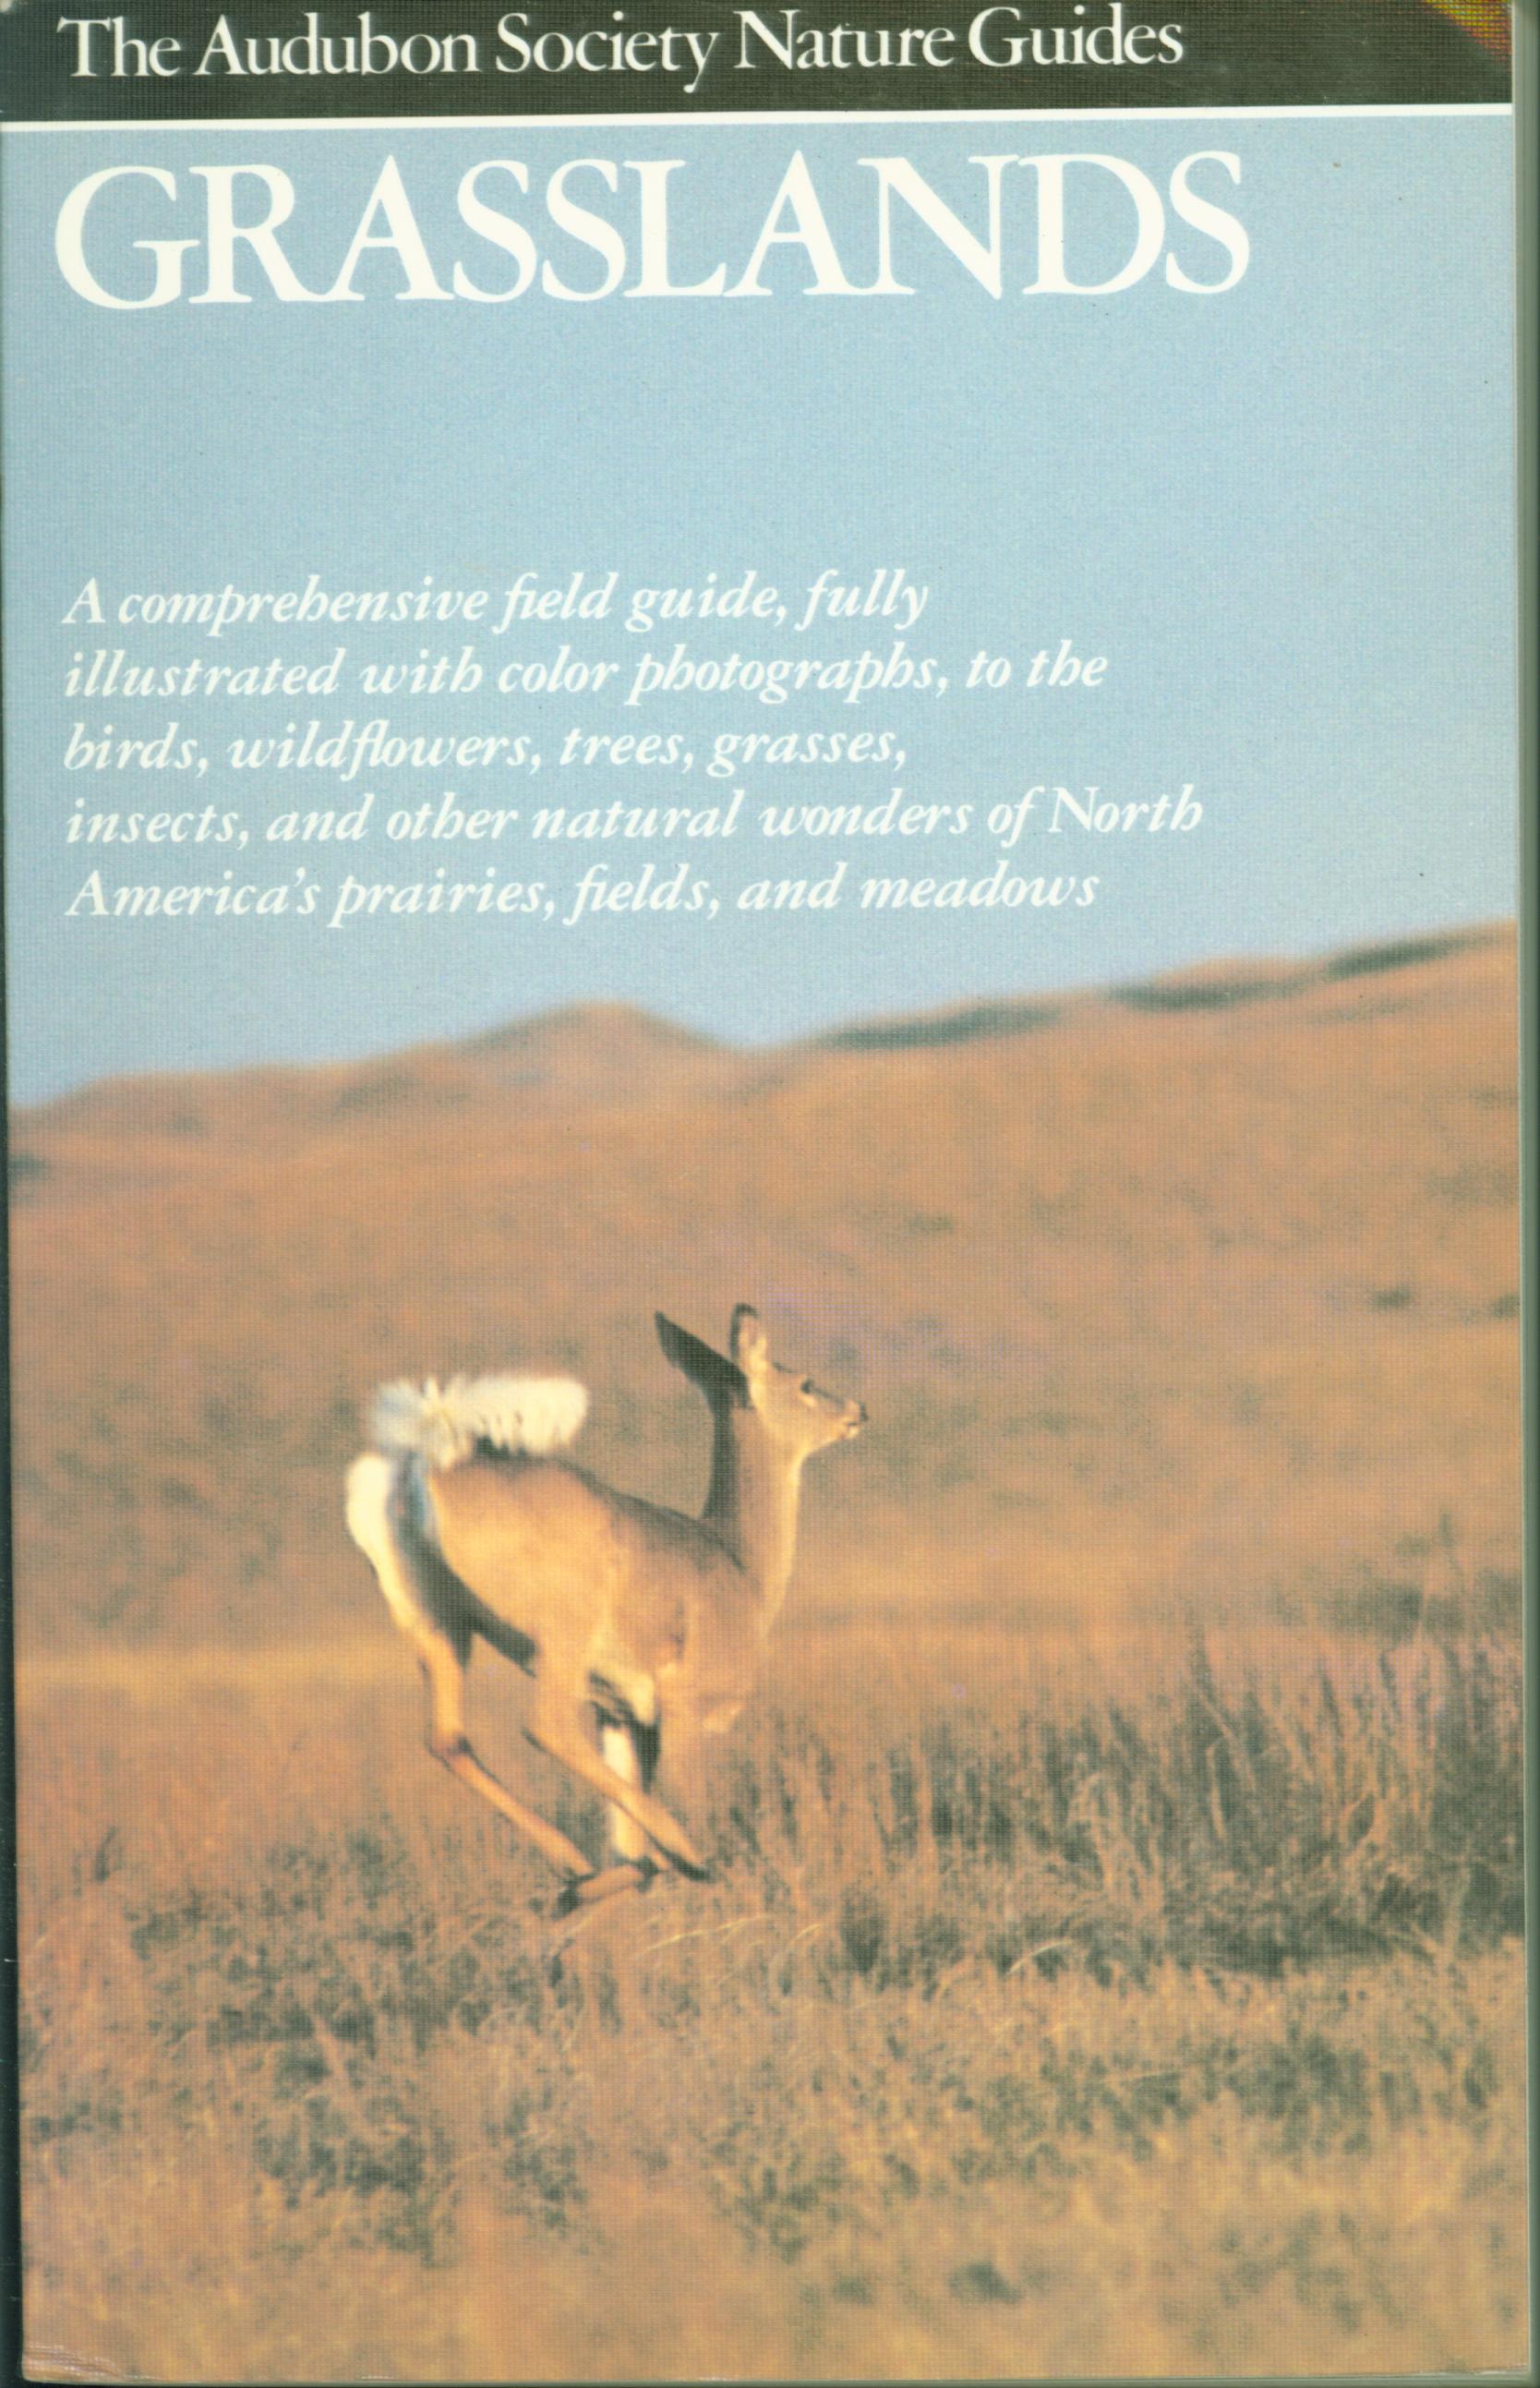 GRASSLANDS: Audubon Society Nature Guide. 